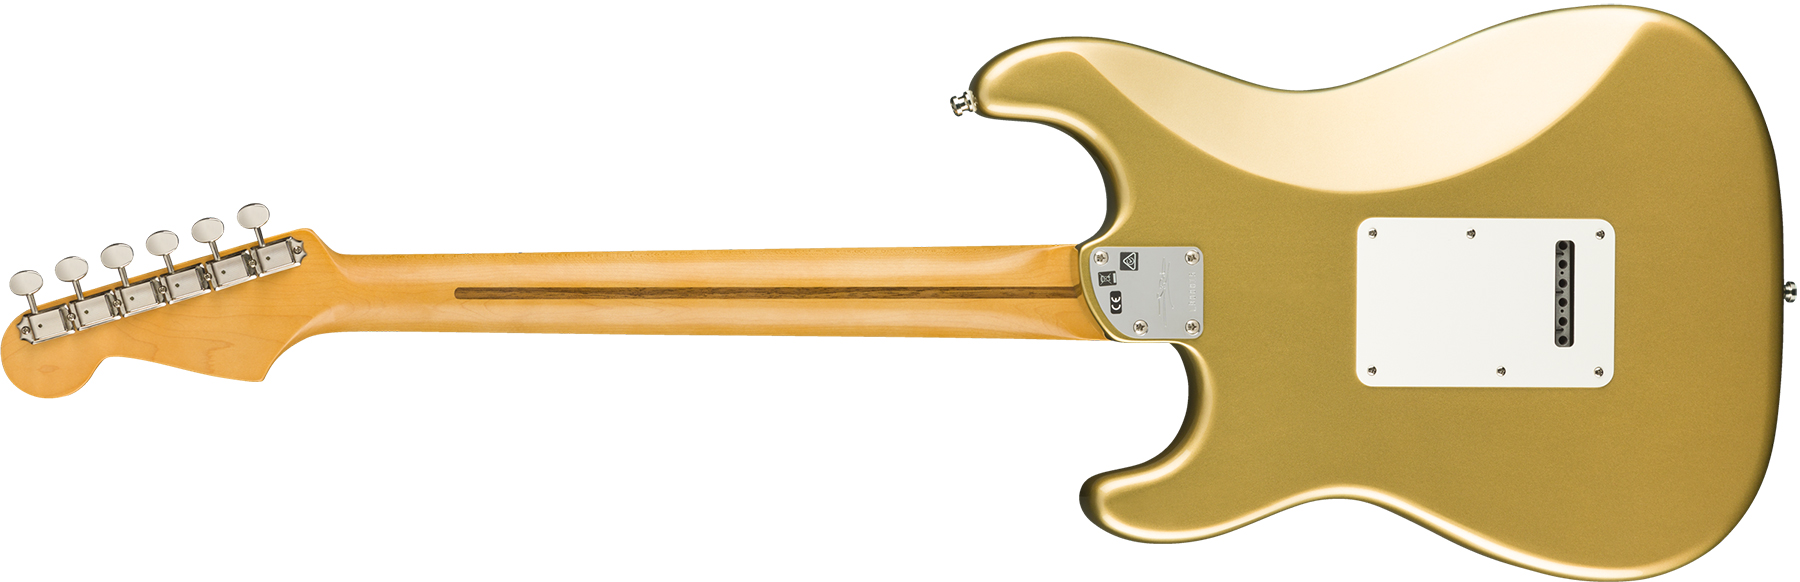 Fender Strat Lincoln Brewster Usa Signature Mn - Aztec Gold - Guitarra eléctrica con forma de str. - Variation 1